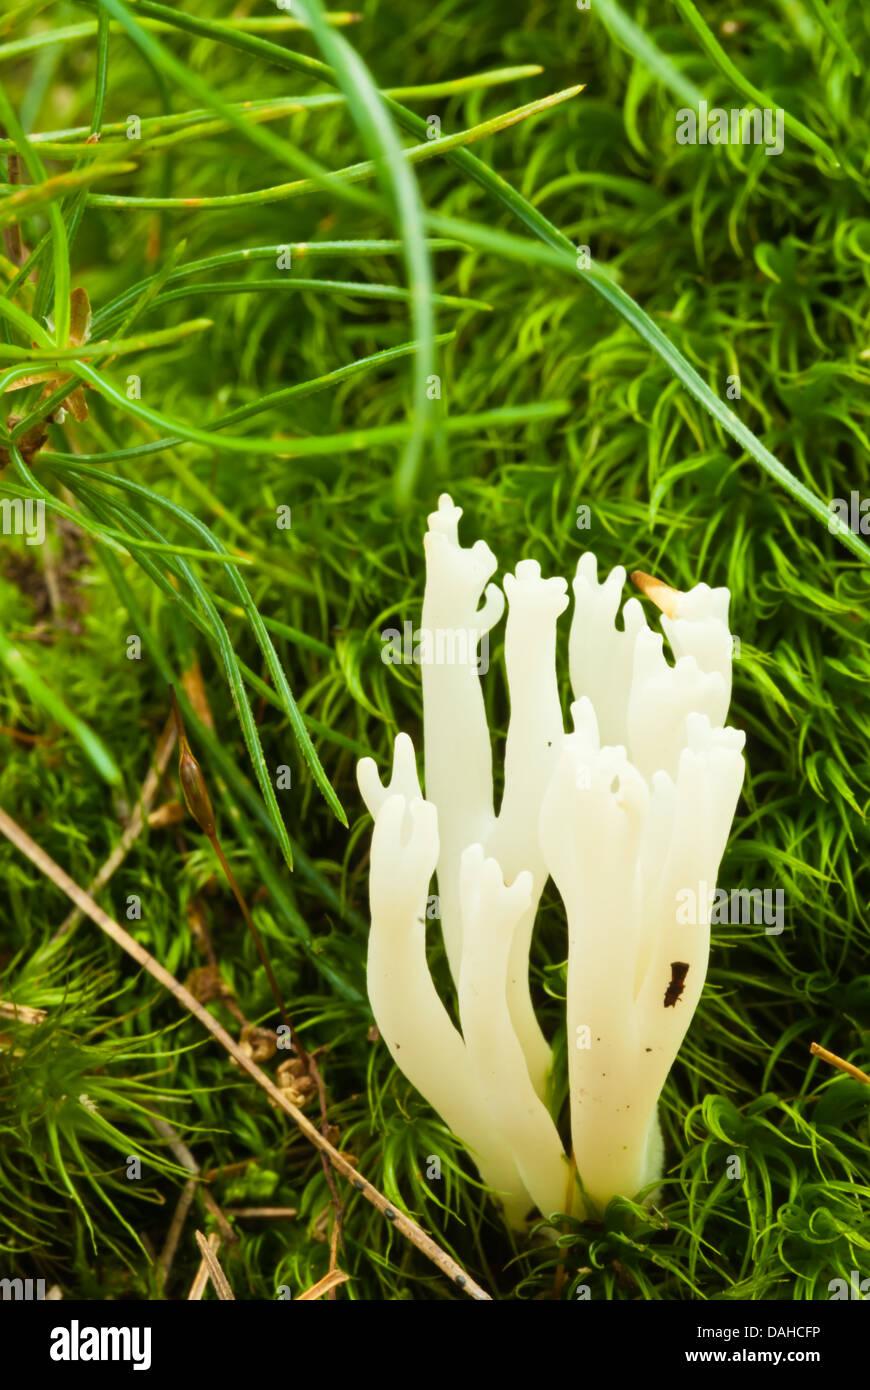 white-cockscomb-coral-fungus-clavulina-cristata-growing-among-moss-DAHCFP.jpg